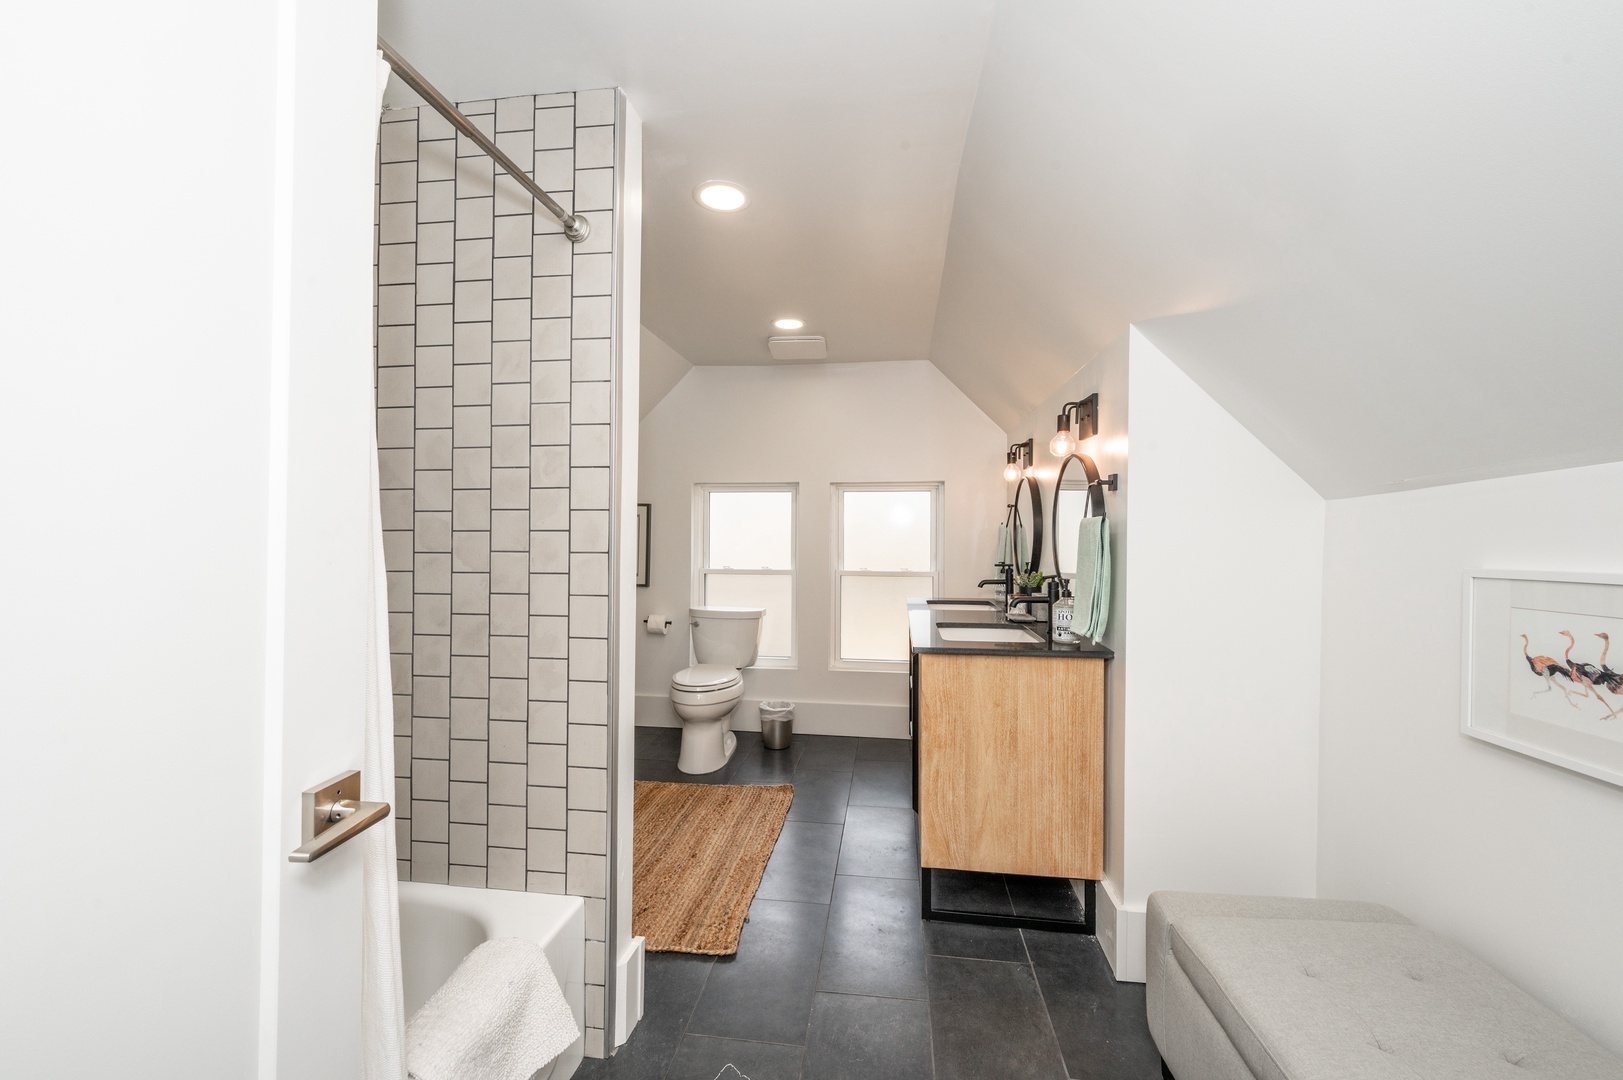 The 3rd-floor full bath showcases a double vanity & shower/tub combo